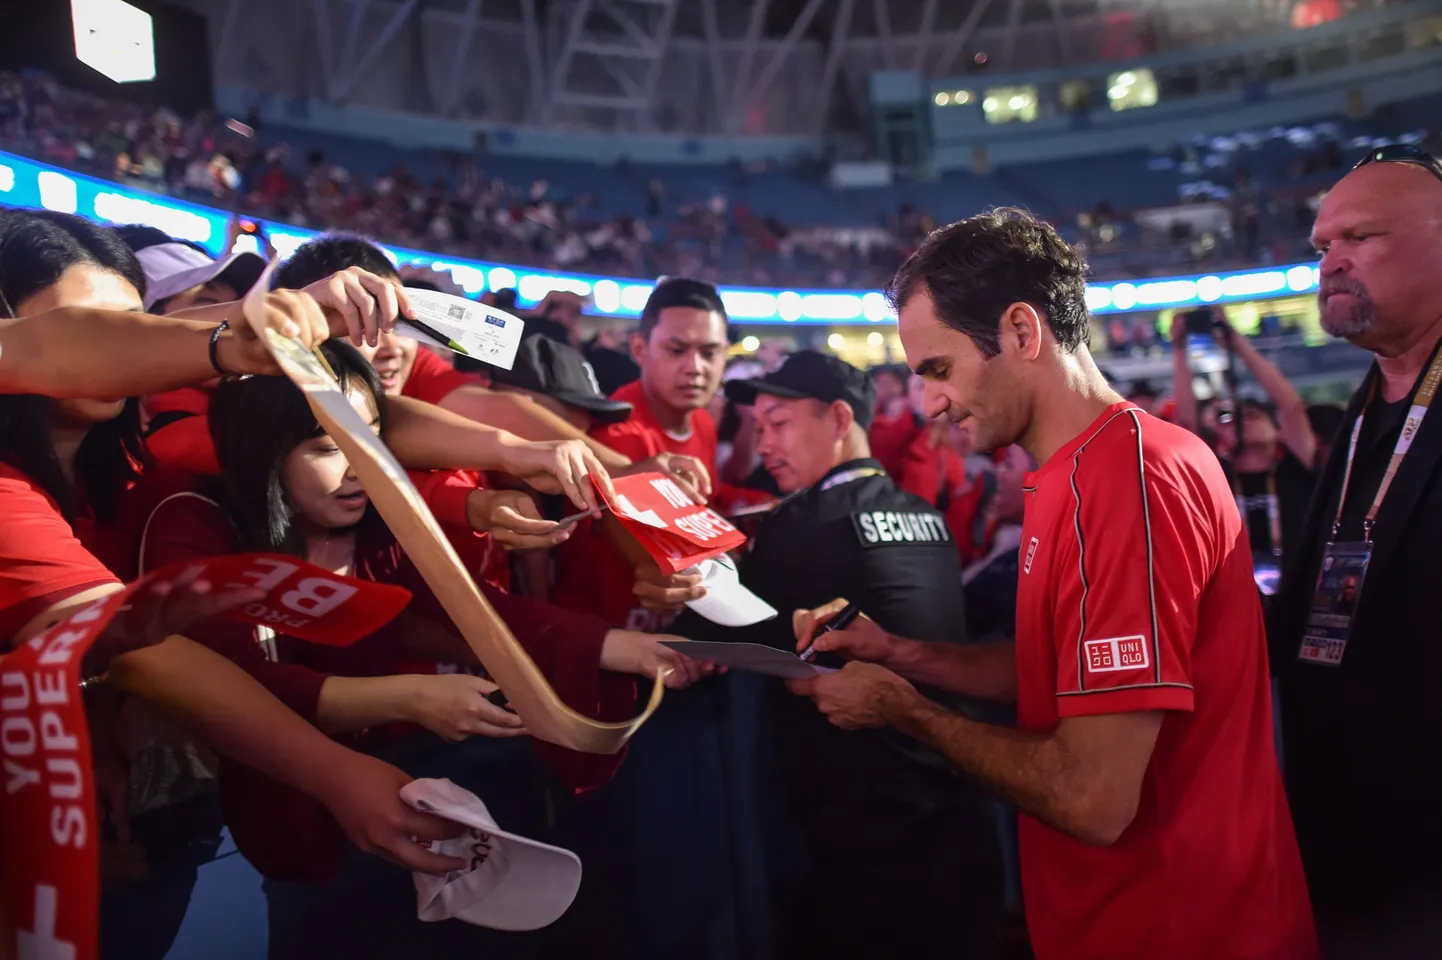 Roger Federer Shangahis fännidele autogramme jagamas